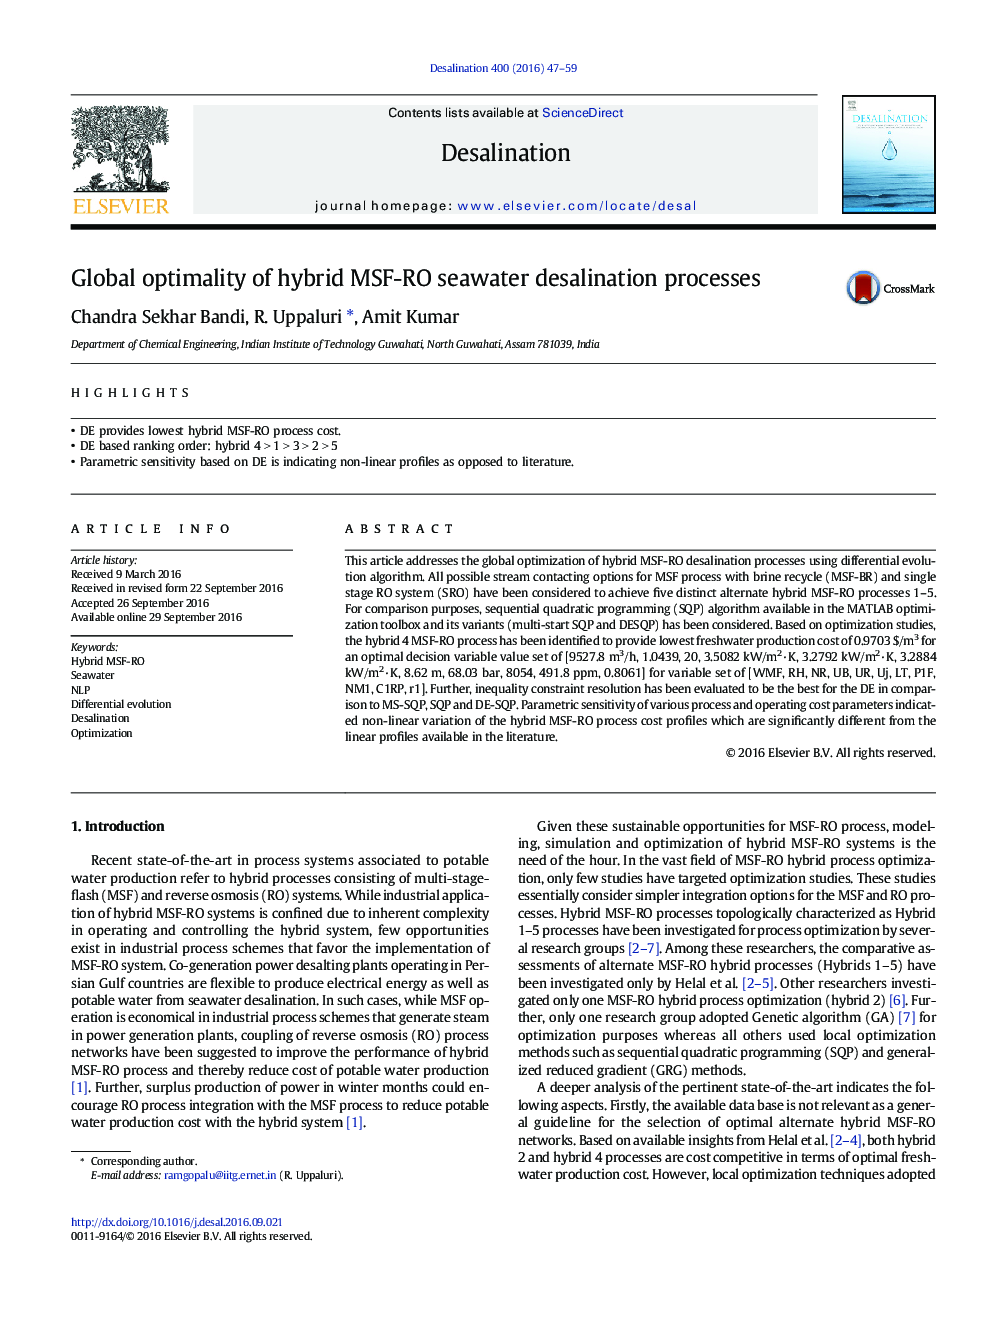 Global optimality of hybrid MSF-RO seawater desalination processes